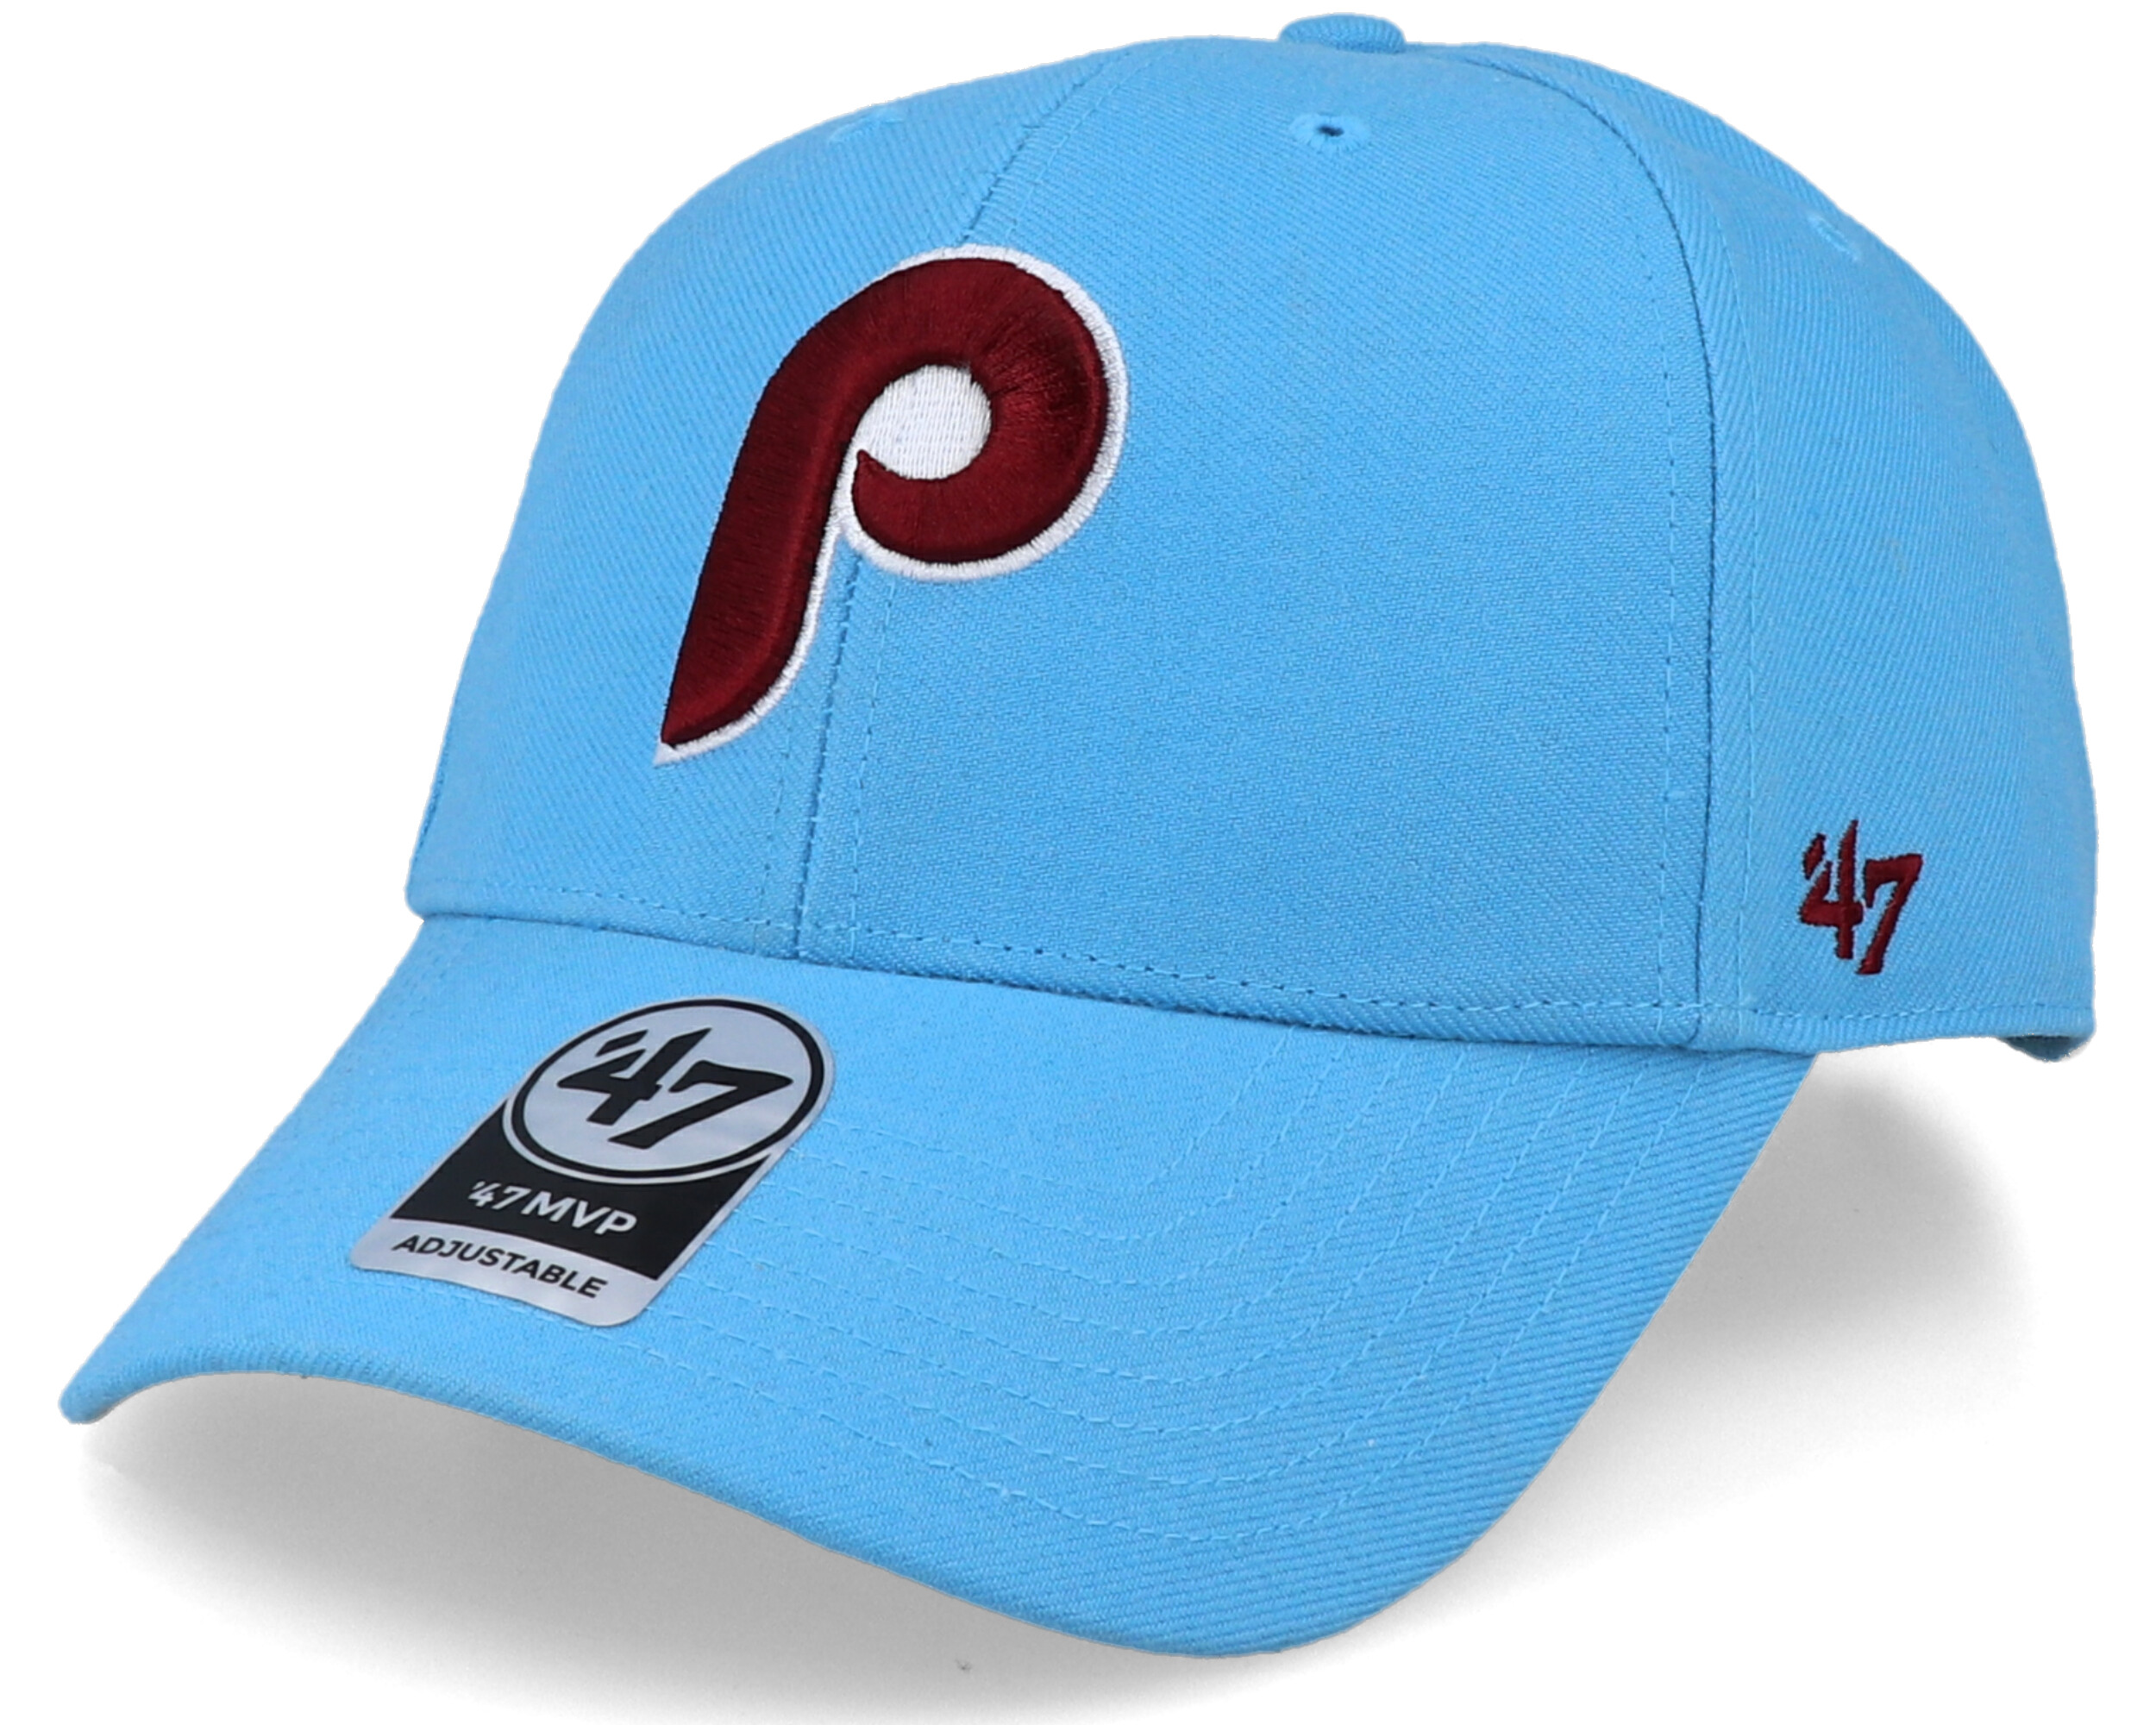 Kansas City Royals Black/Powder MVP Adjustable Hat by '47 Brand